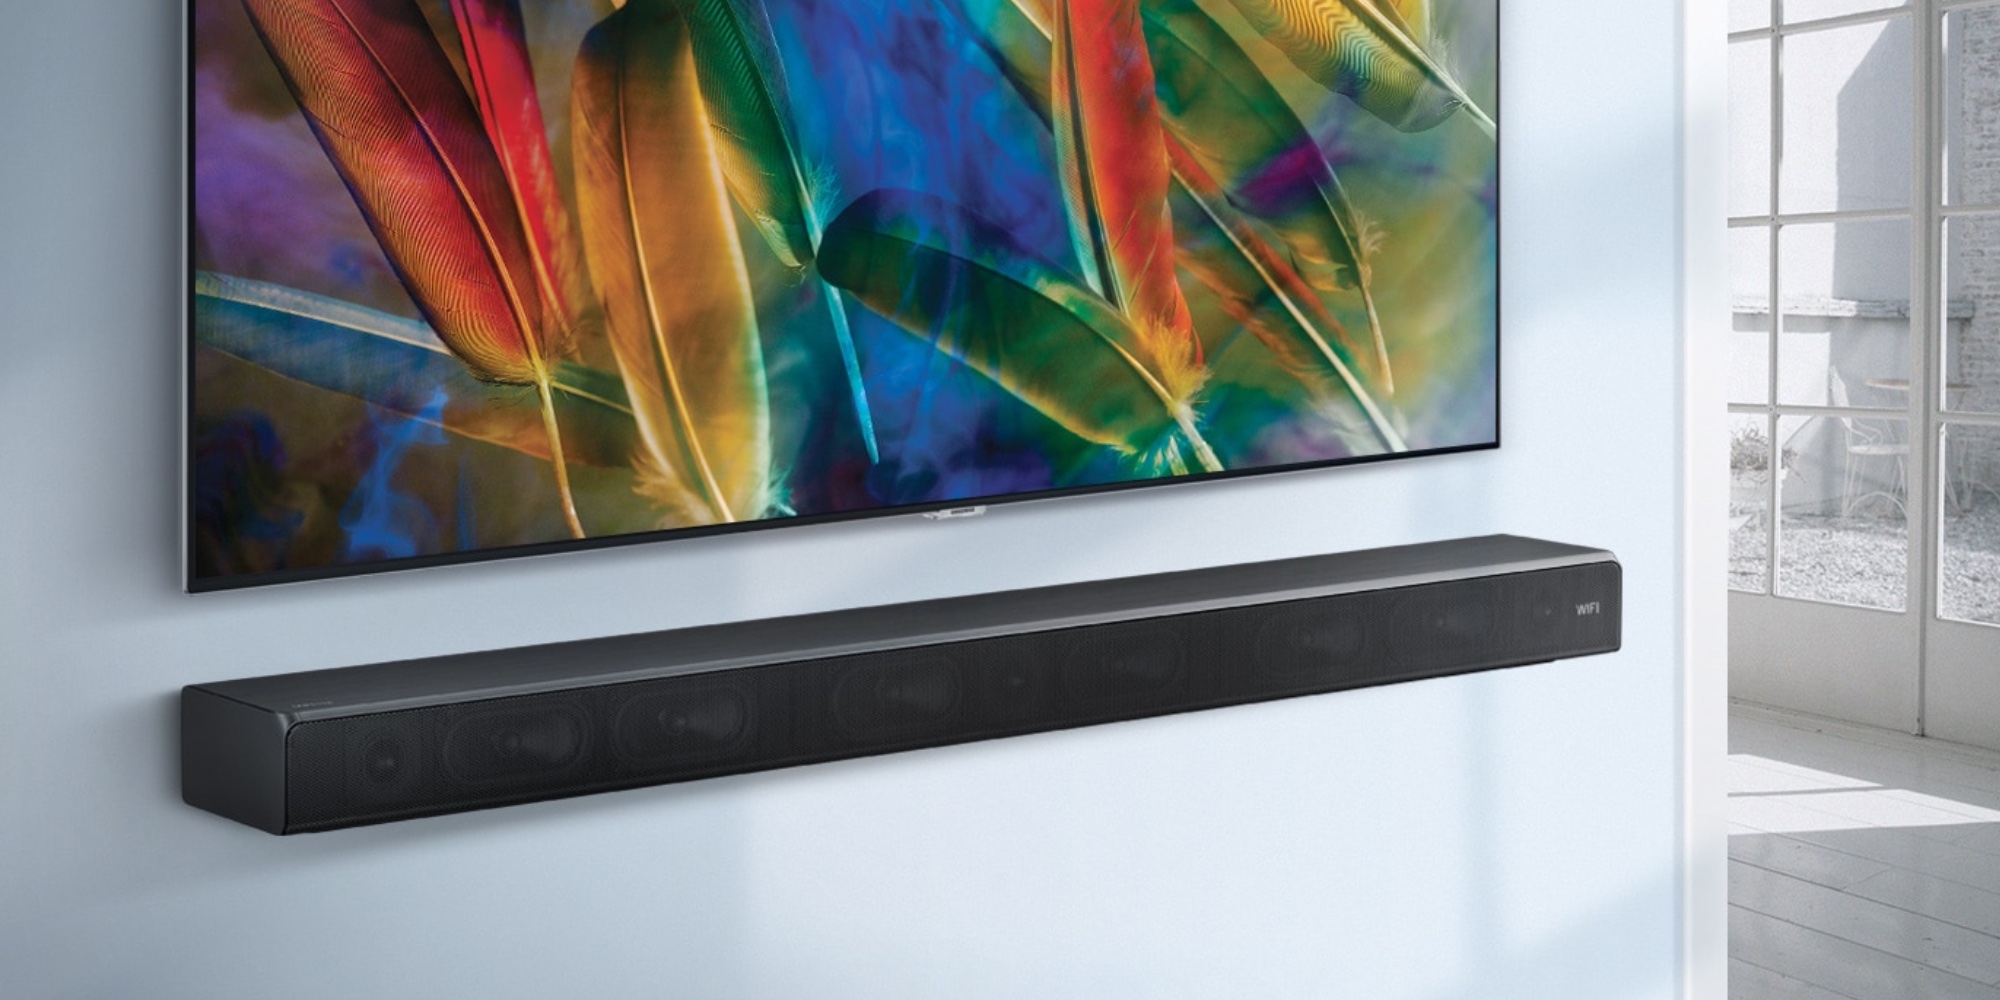 up your home theater $298 w/ Samsung's Premium Soundbar (Reg. $400)